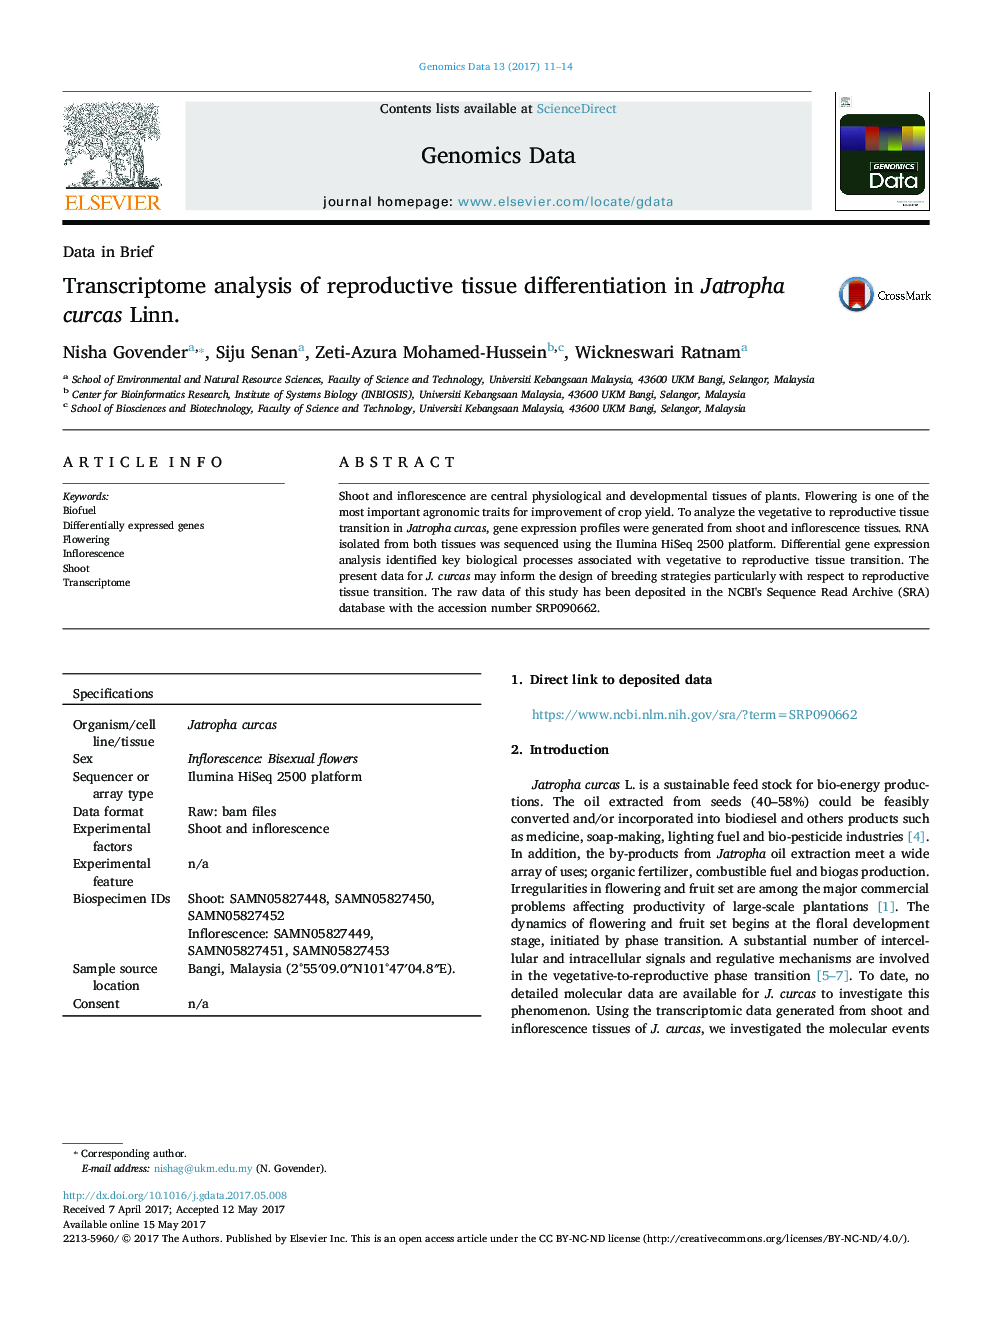 Transcriptome analysis of reproductive tissue differentiation in Jatropha curcas Linn.